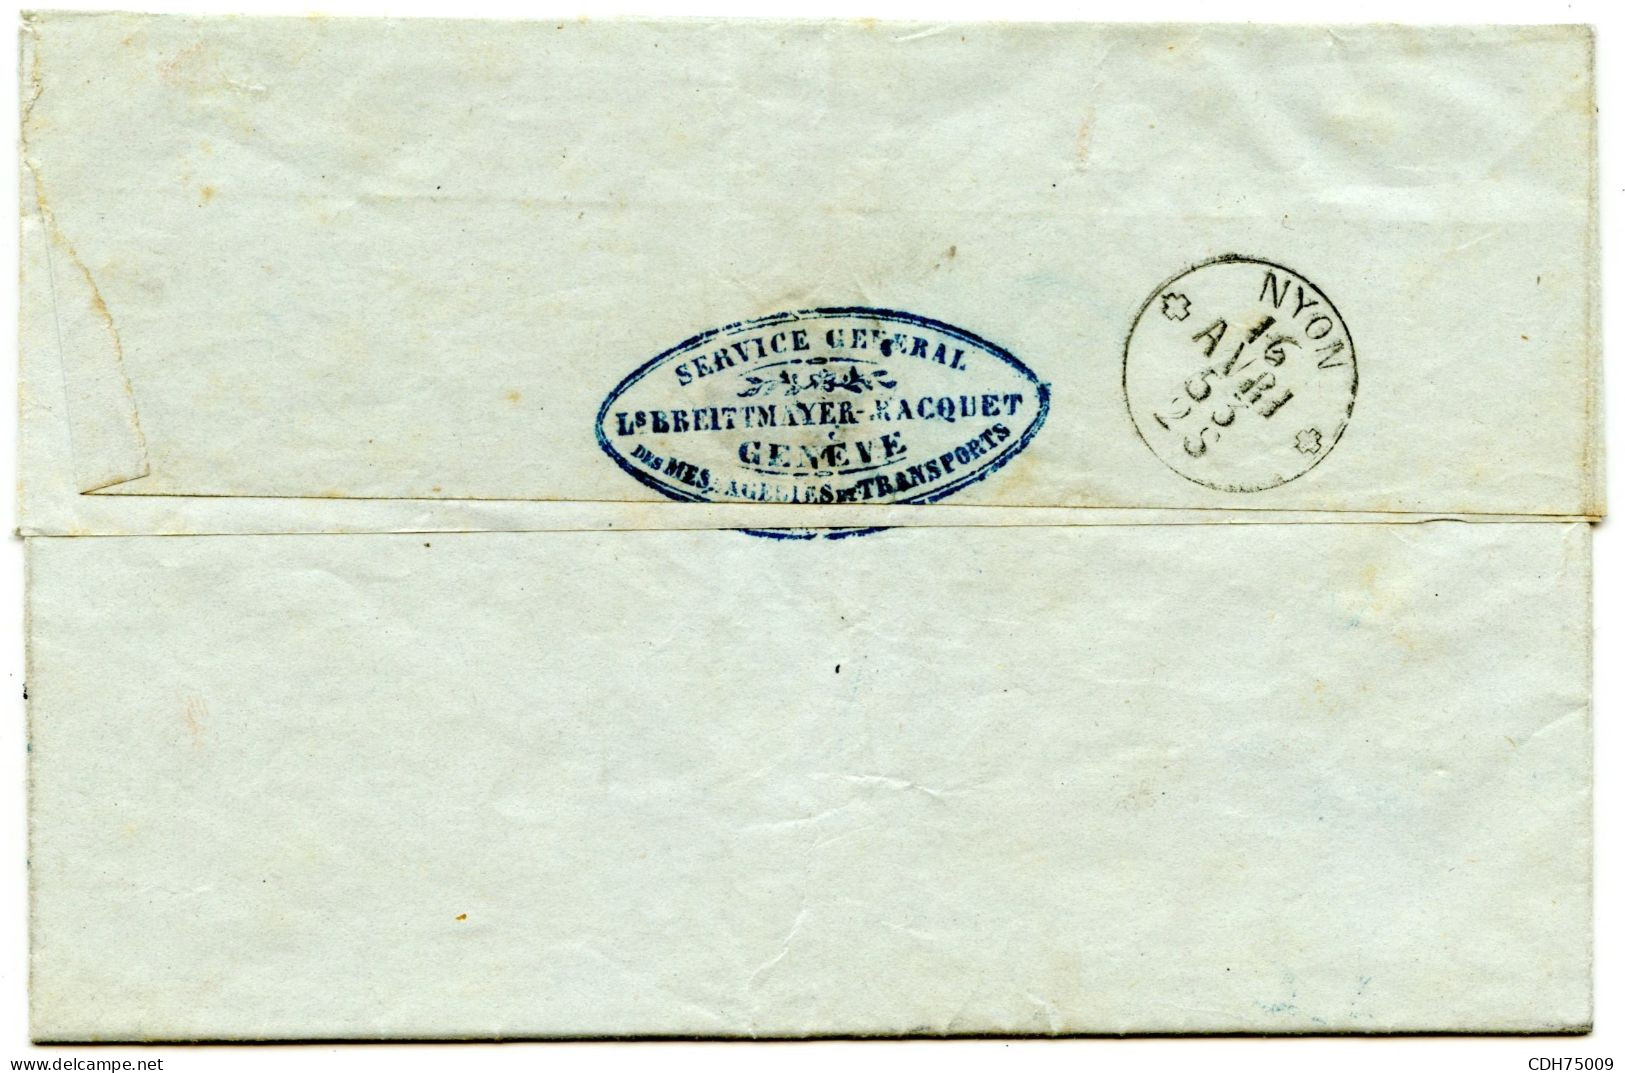 SUISSE - SBK 17II  5 RAPPEN BLEU SUR LETTRE DE GENEVE POUR NYON, 1853  - SIGNEE SCHELLER - 1843-1852 Kantonalmarken Und Bundesmarken